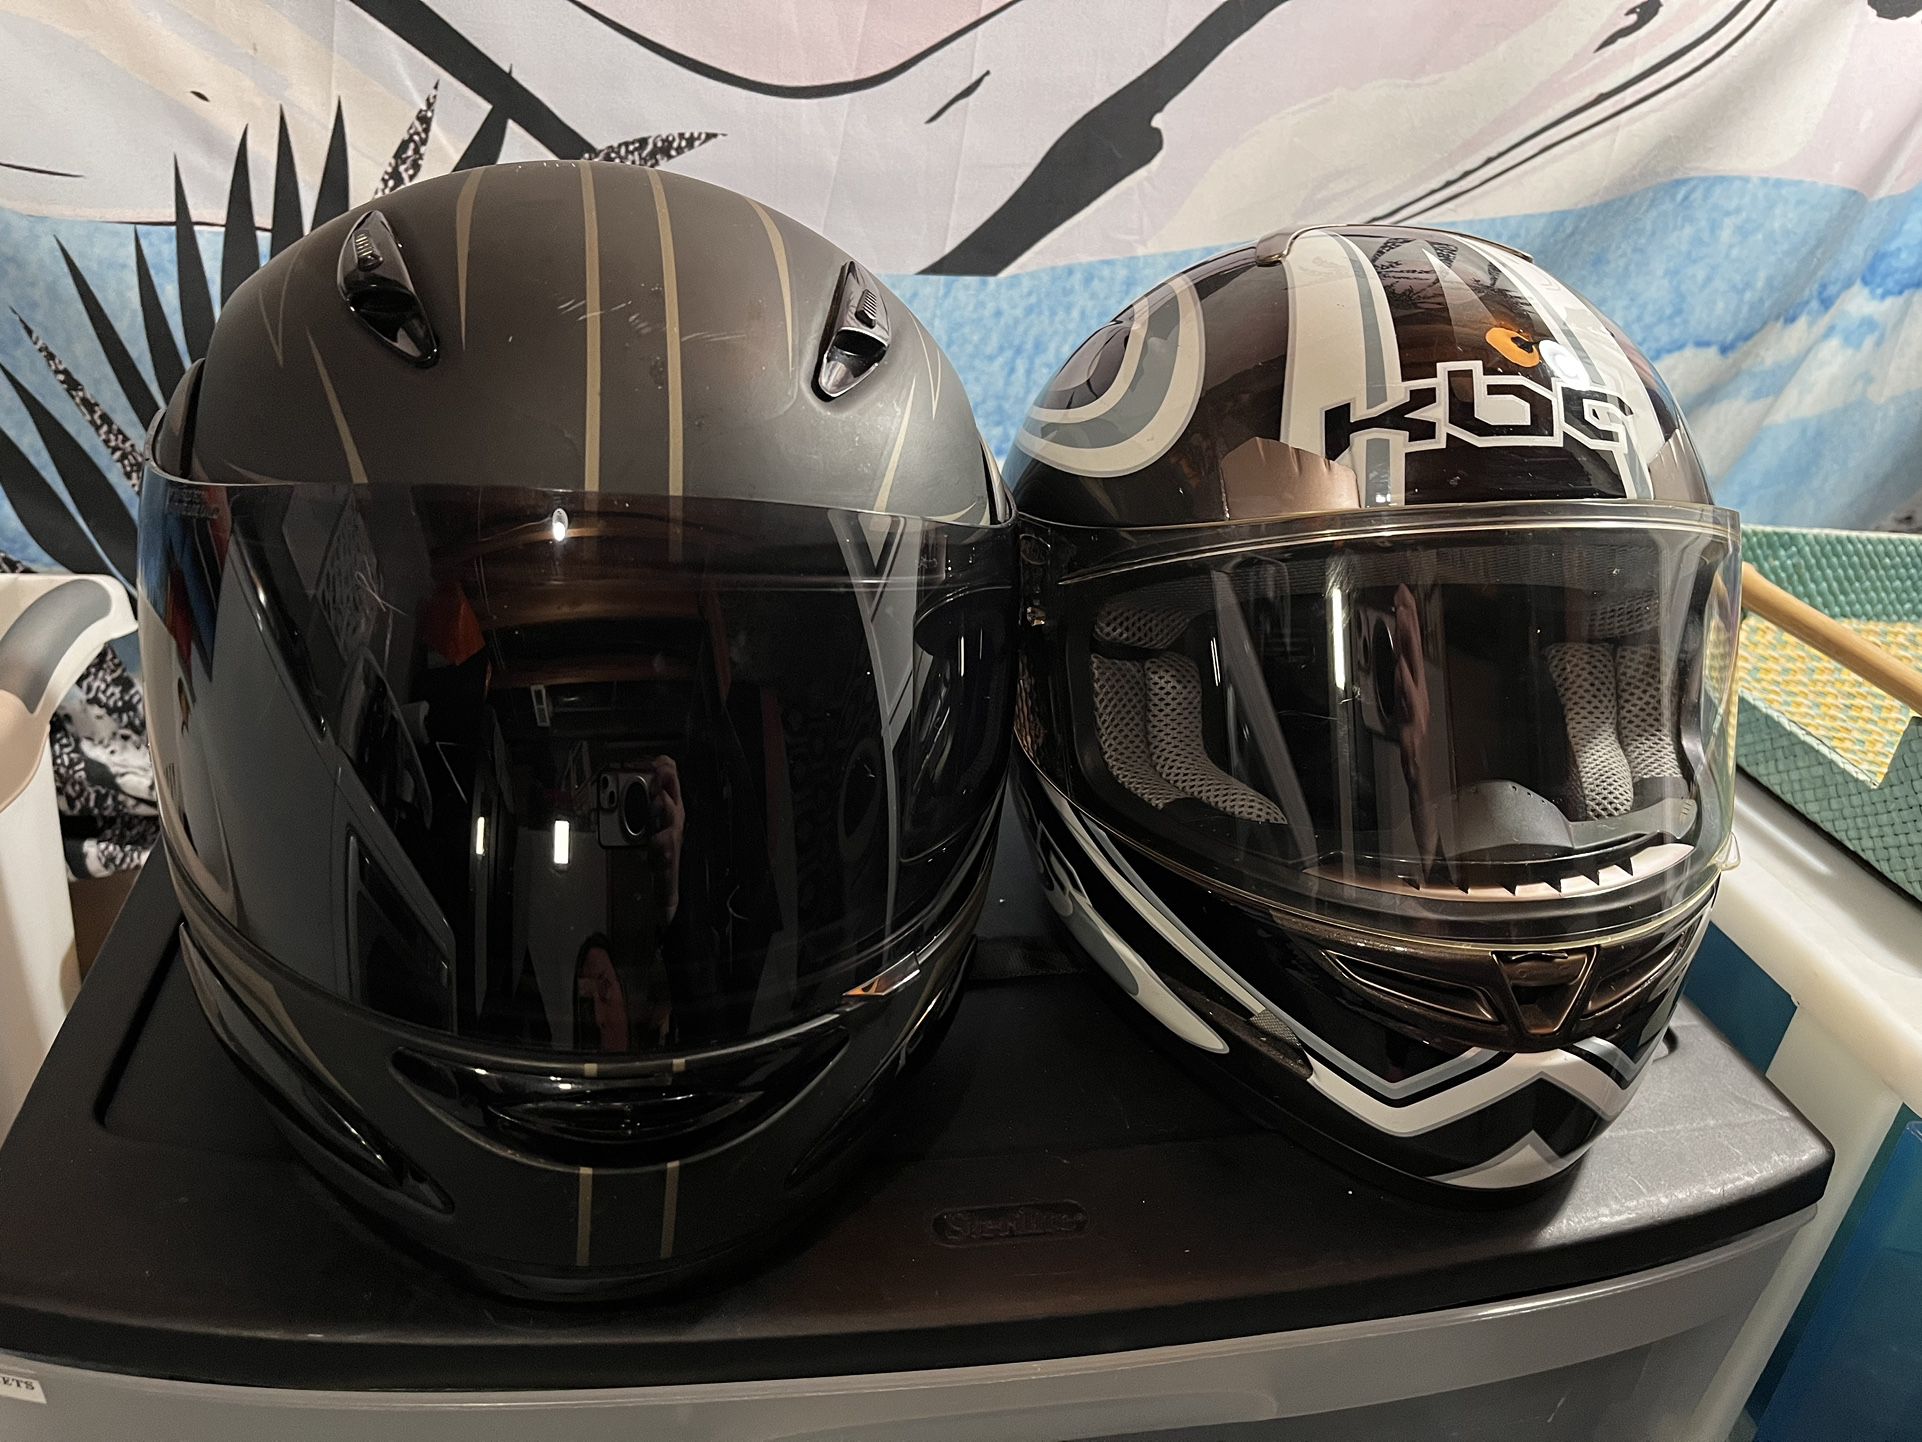 2 DOT Motorcycle Helmets - GMAX & KBC (Size M)